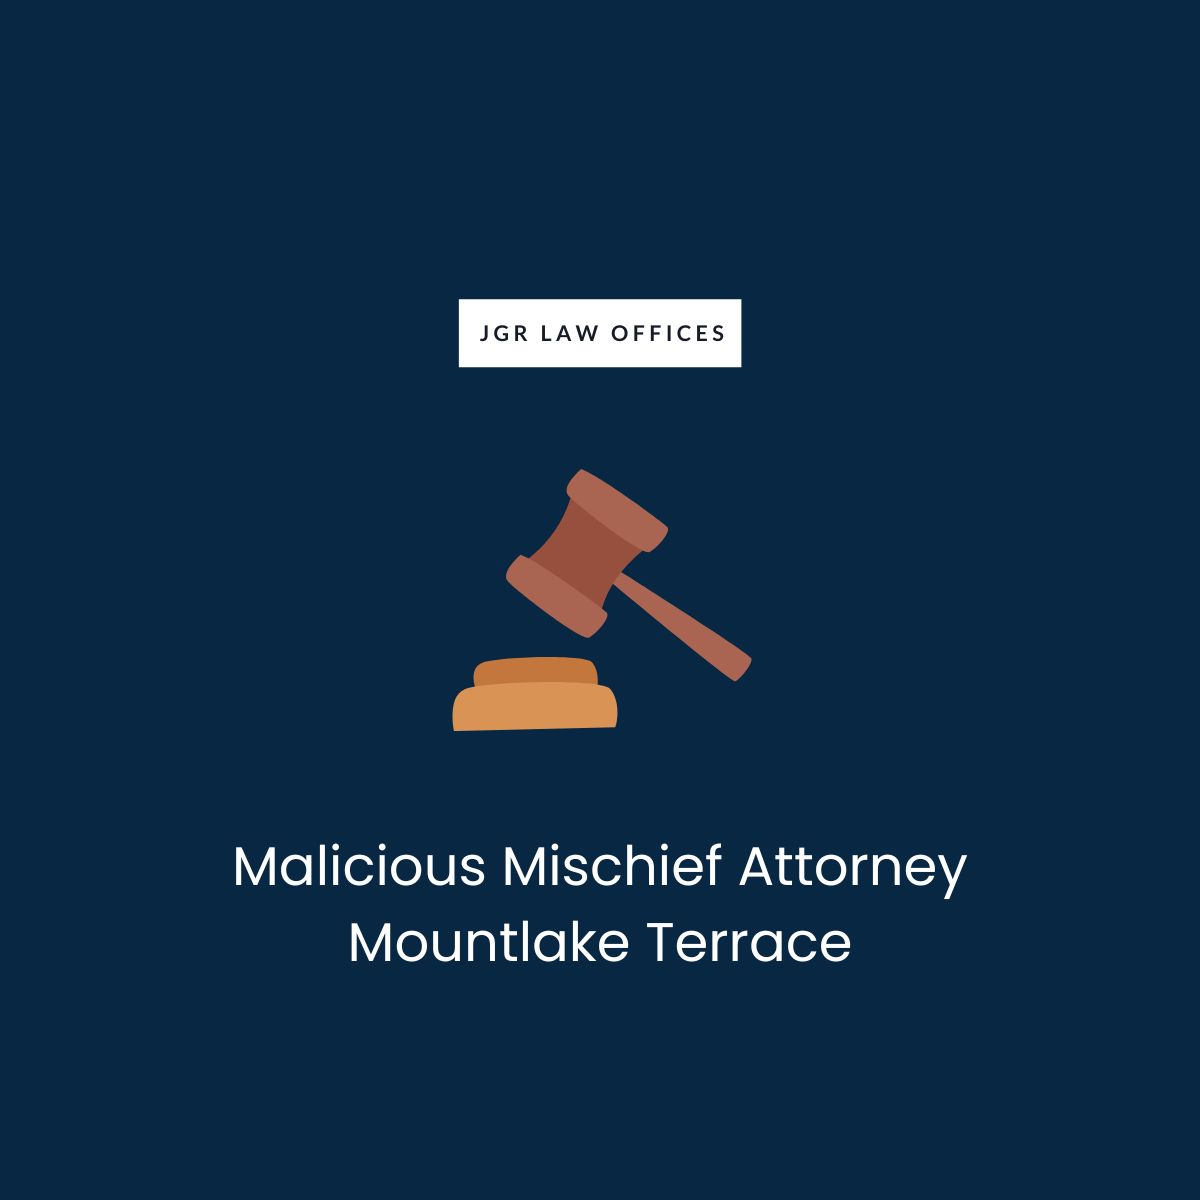 Malicious Mischief Attorney Mountlake Terrace